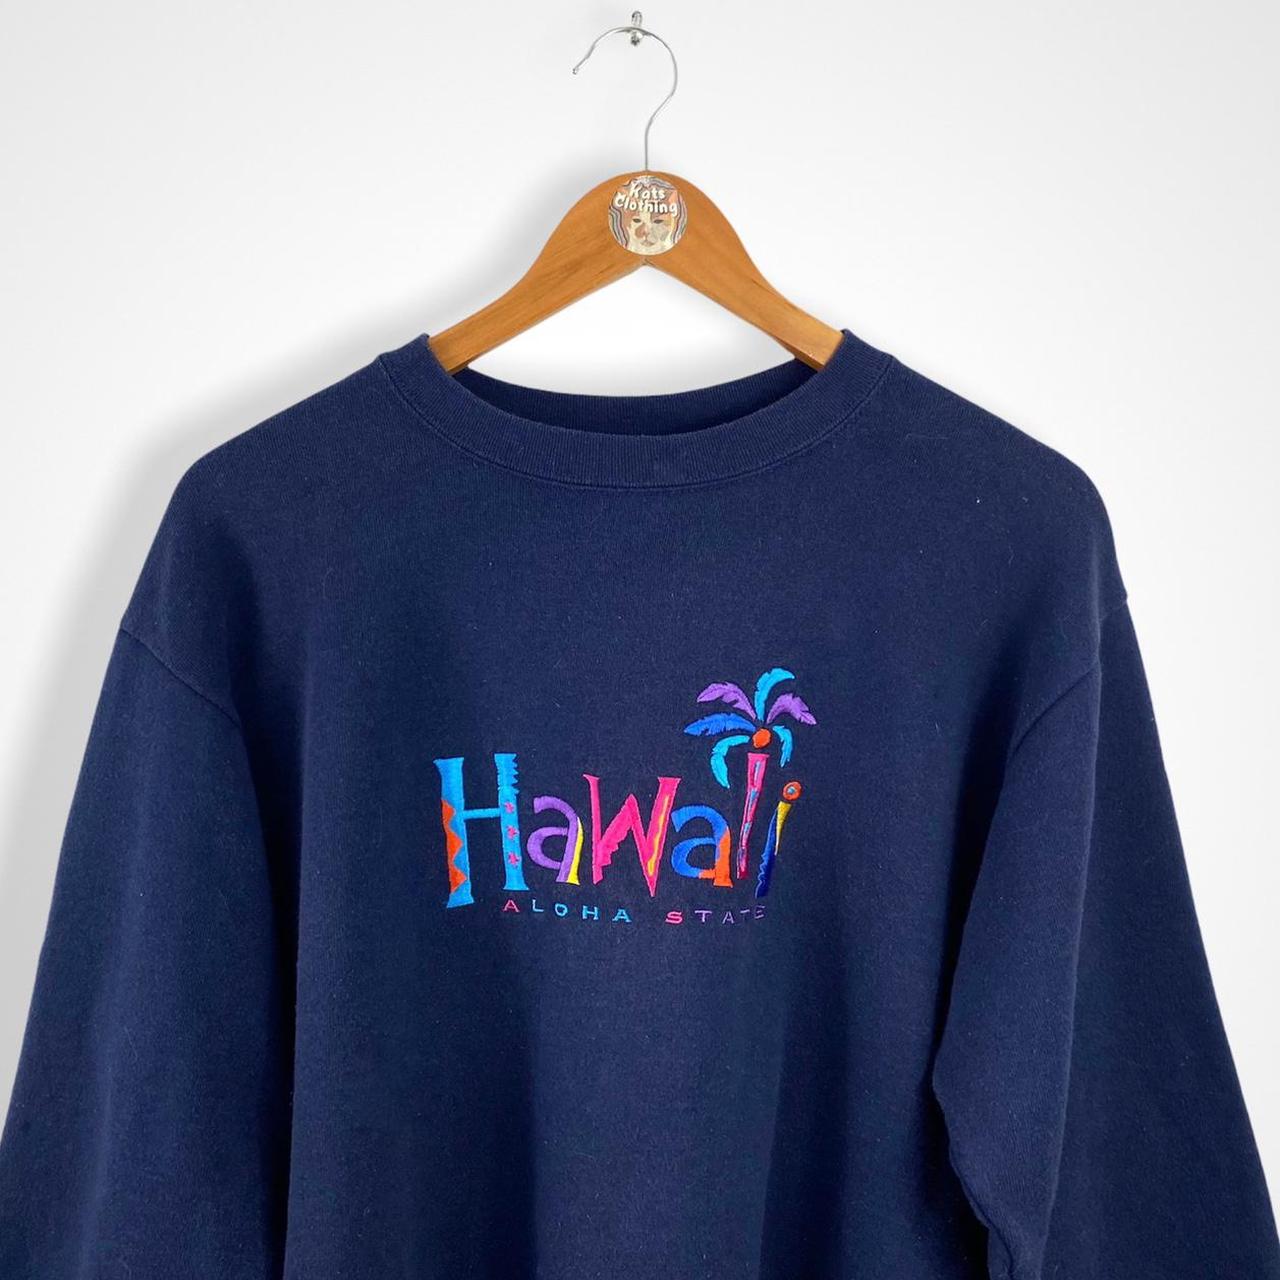 Vintage Embroidered Hawaii Navy Blue Sweatshirt... - Depop